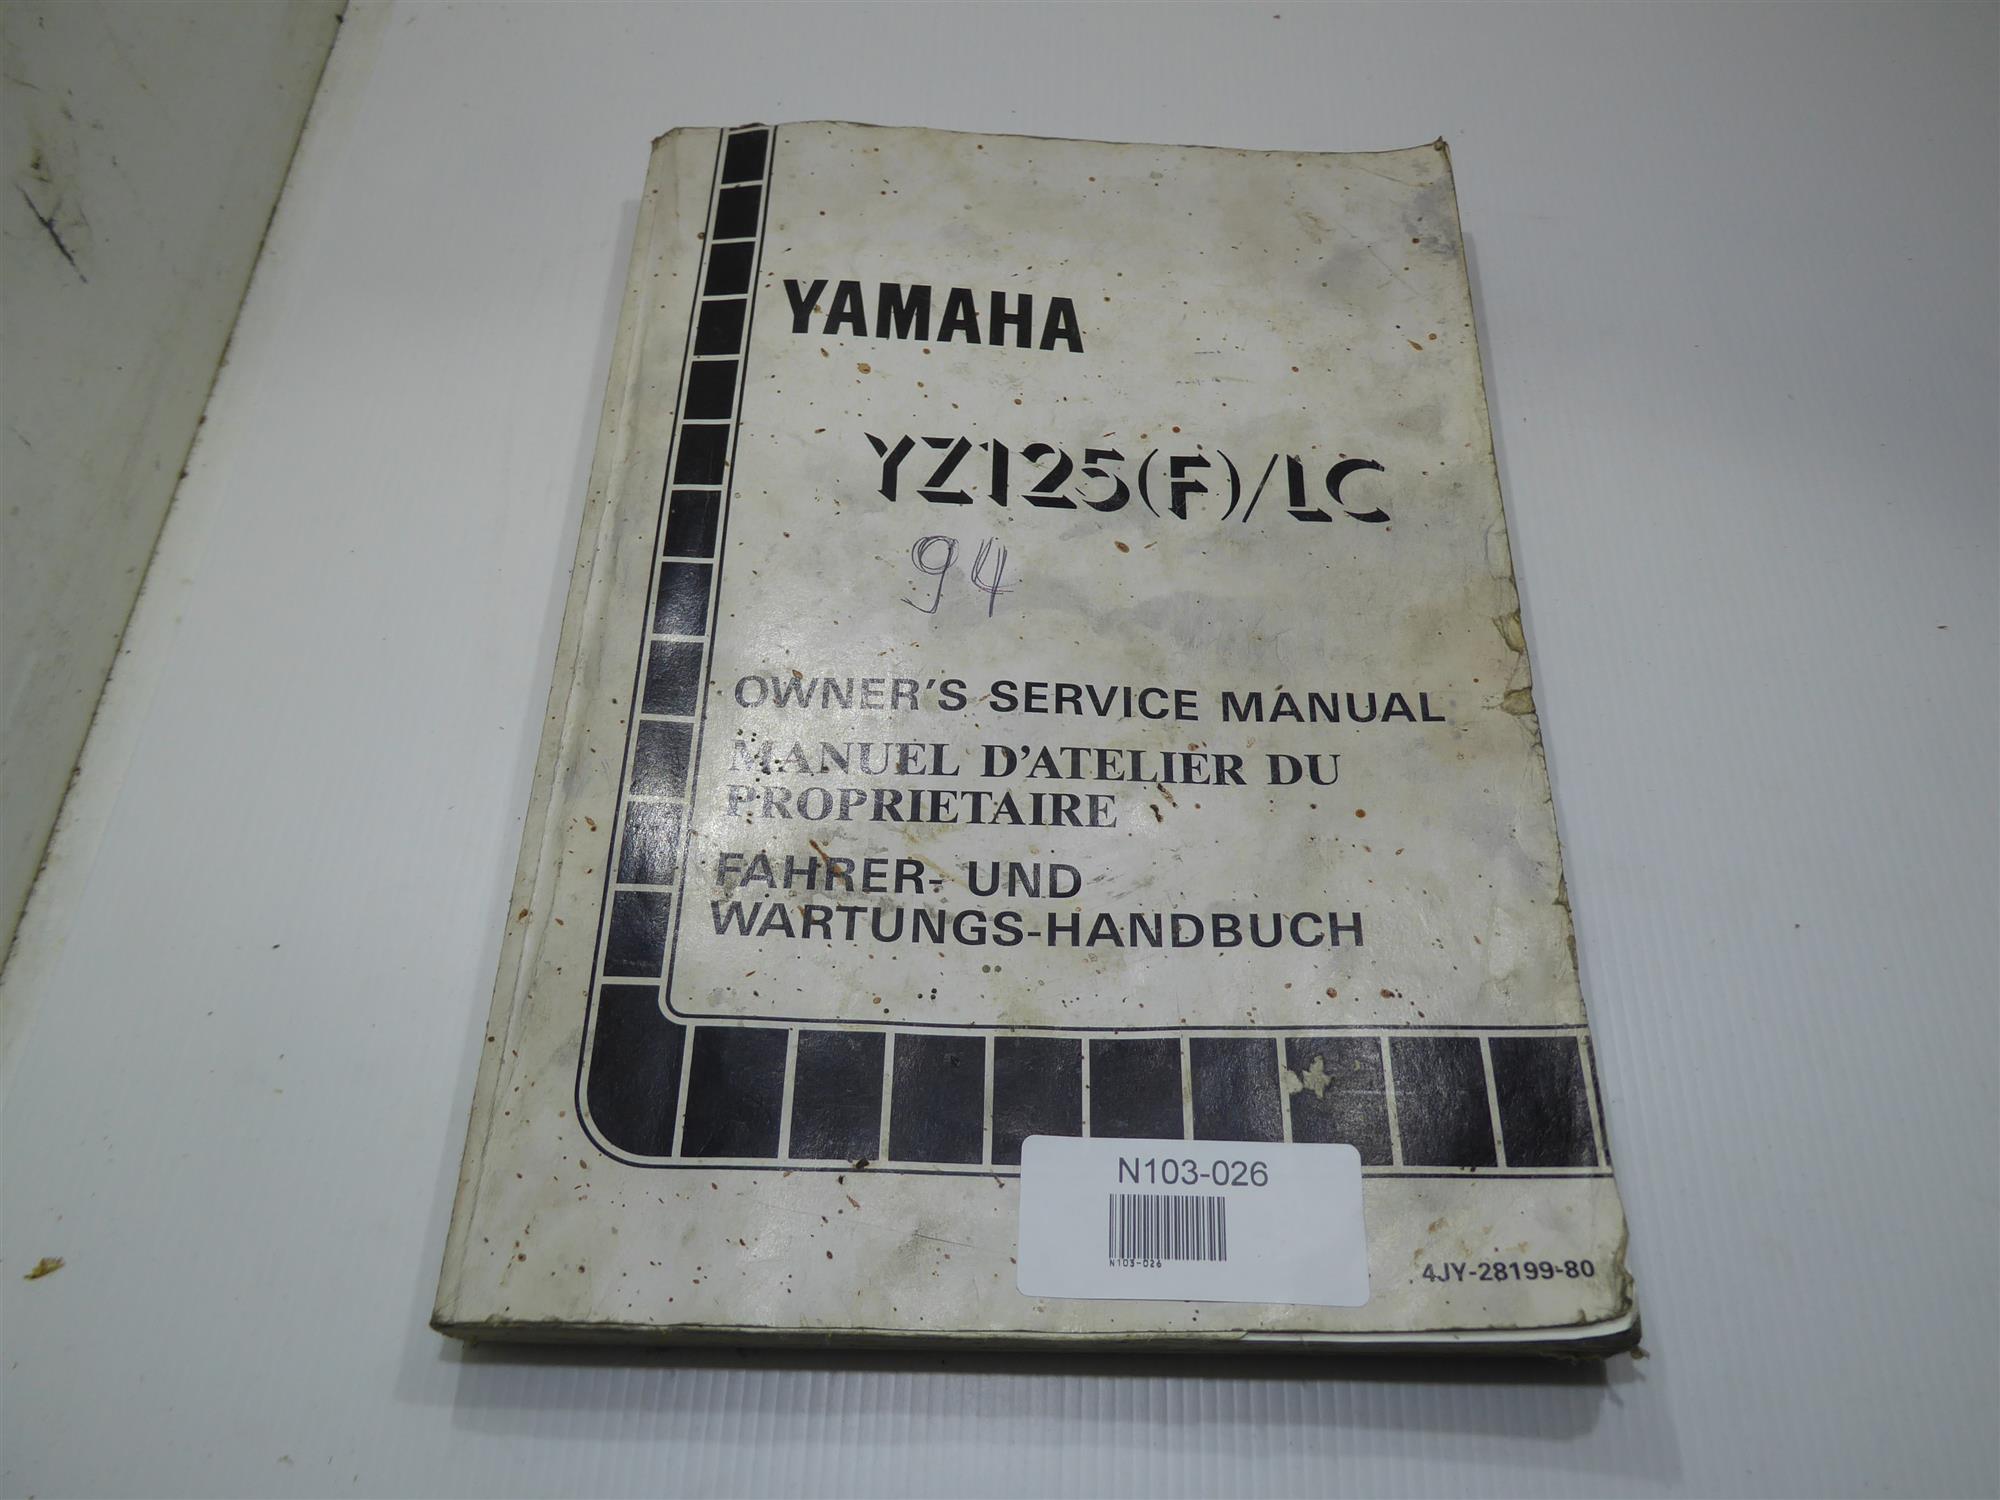 Yamaha YZ 125 1994 Fahrer- und Wartungshandbuch 4JY-28199-80